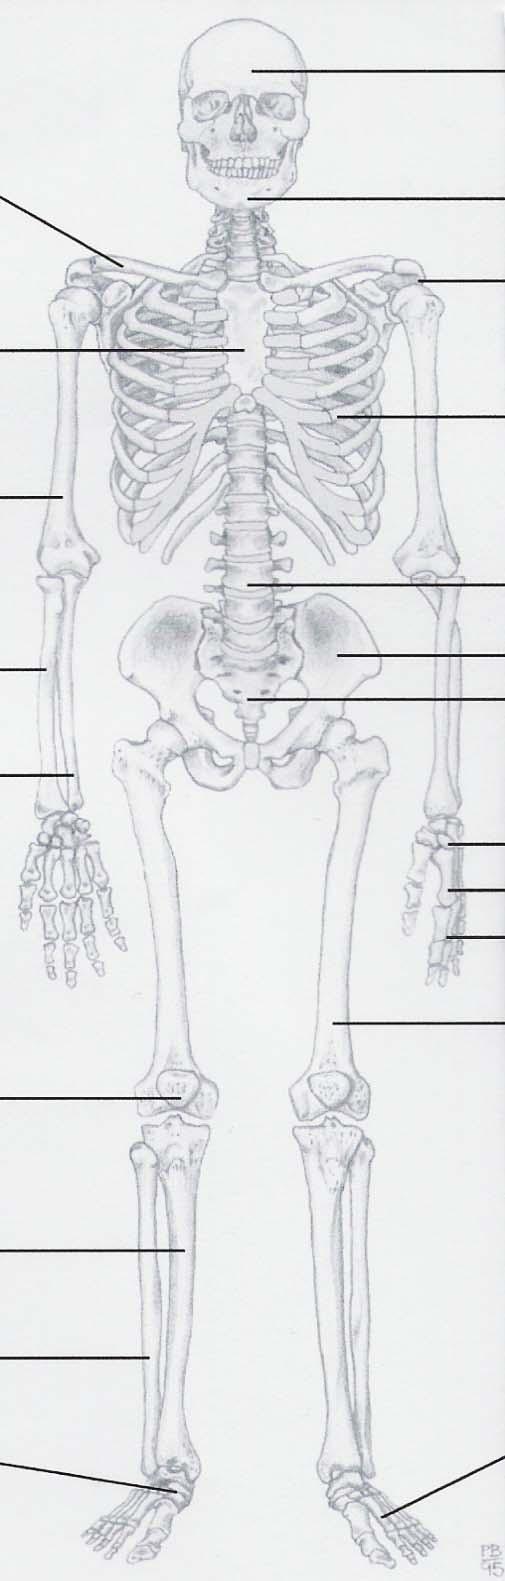 The Human Skeleton 쇄골 (Clavicle) 흉골 ( 가슴뼈 ; Sternum) 두개 (Cranium) 하악골 (Mandible) 경추 (cervical vertebrae) 견갑골 (Scapula) 늑골 (Rib) 상완골 ( 윗팔뼈 ; Humerus) 요추 (Lumbar vertebrae) 요골